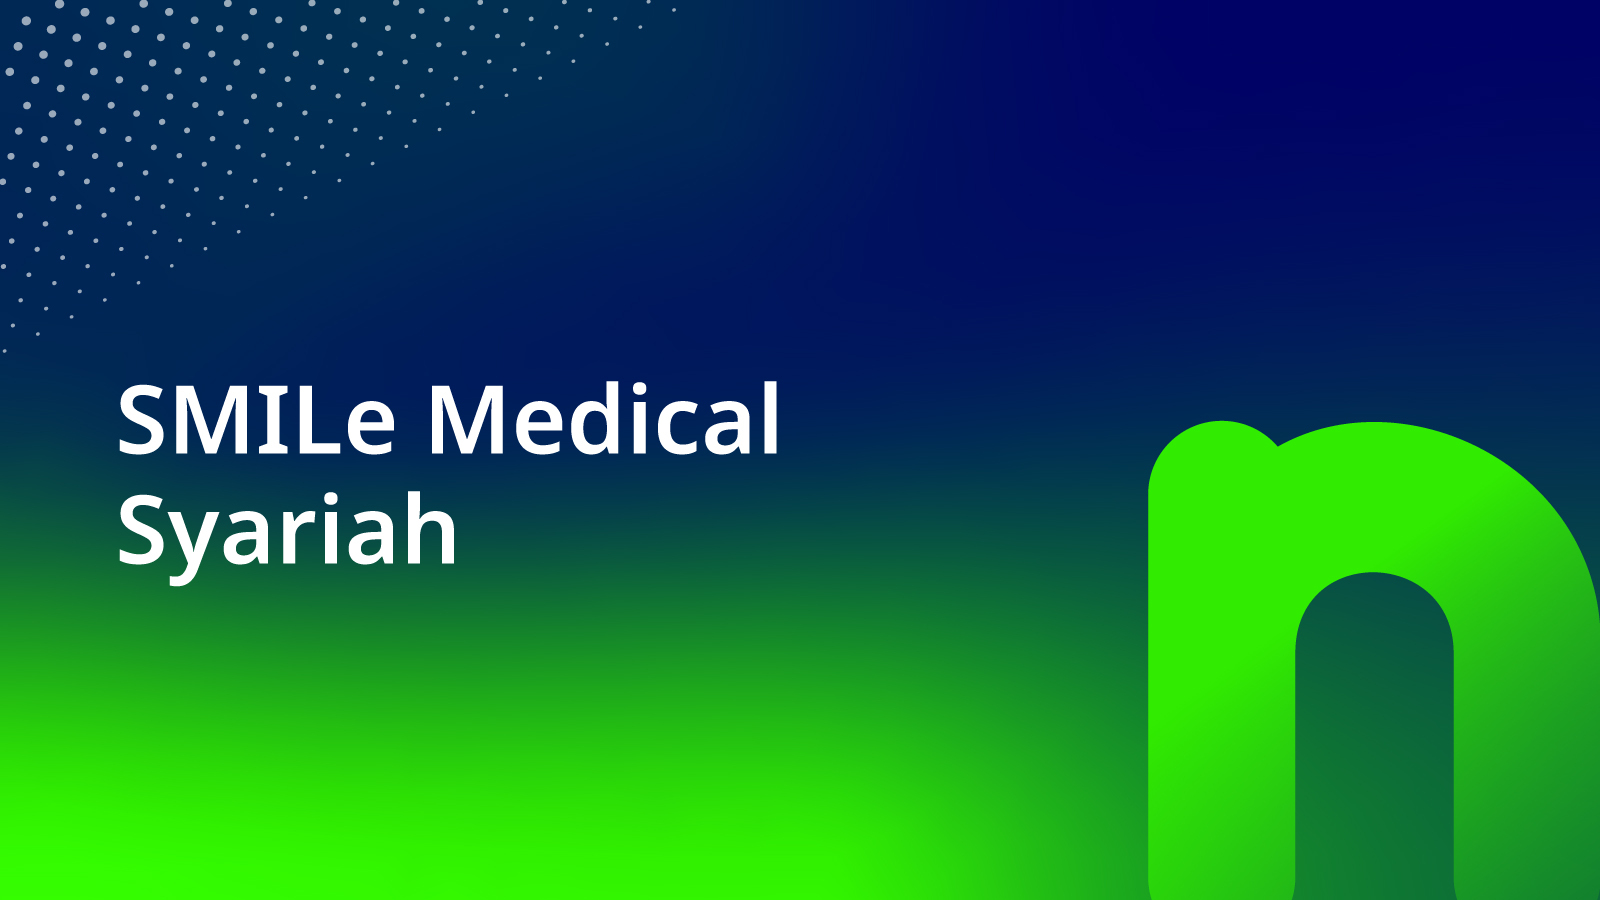 SMiLe Medical Syariah